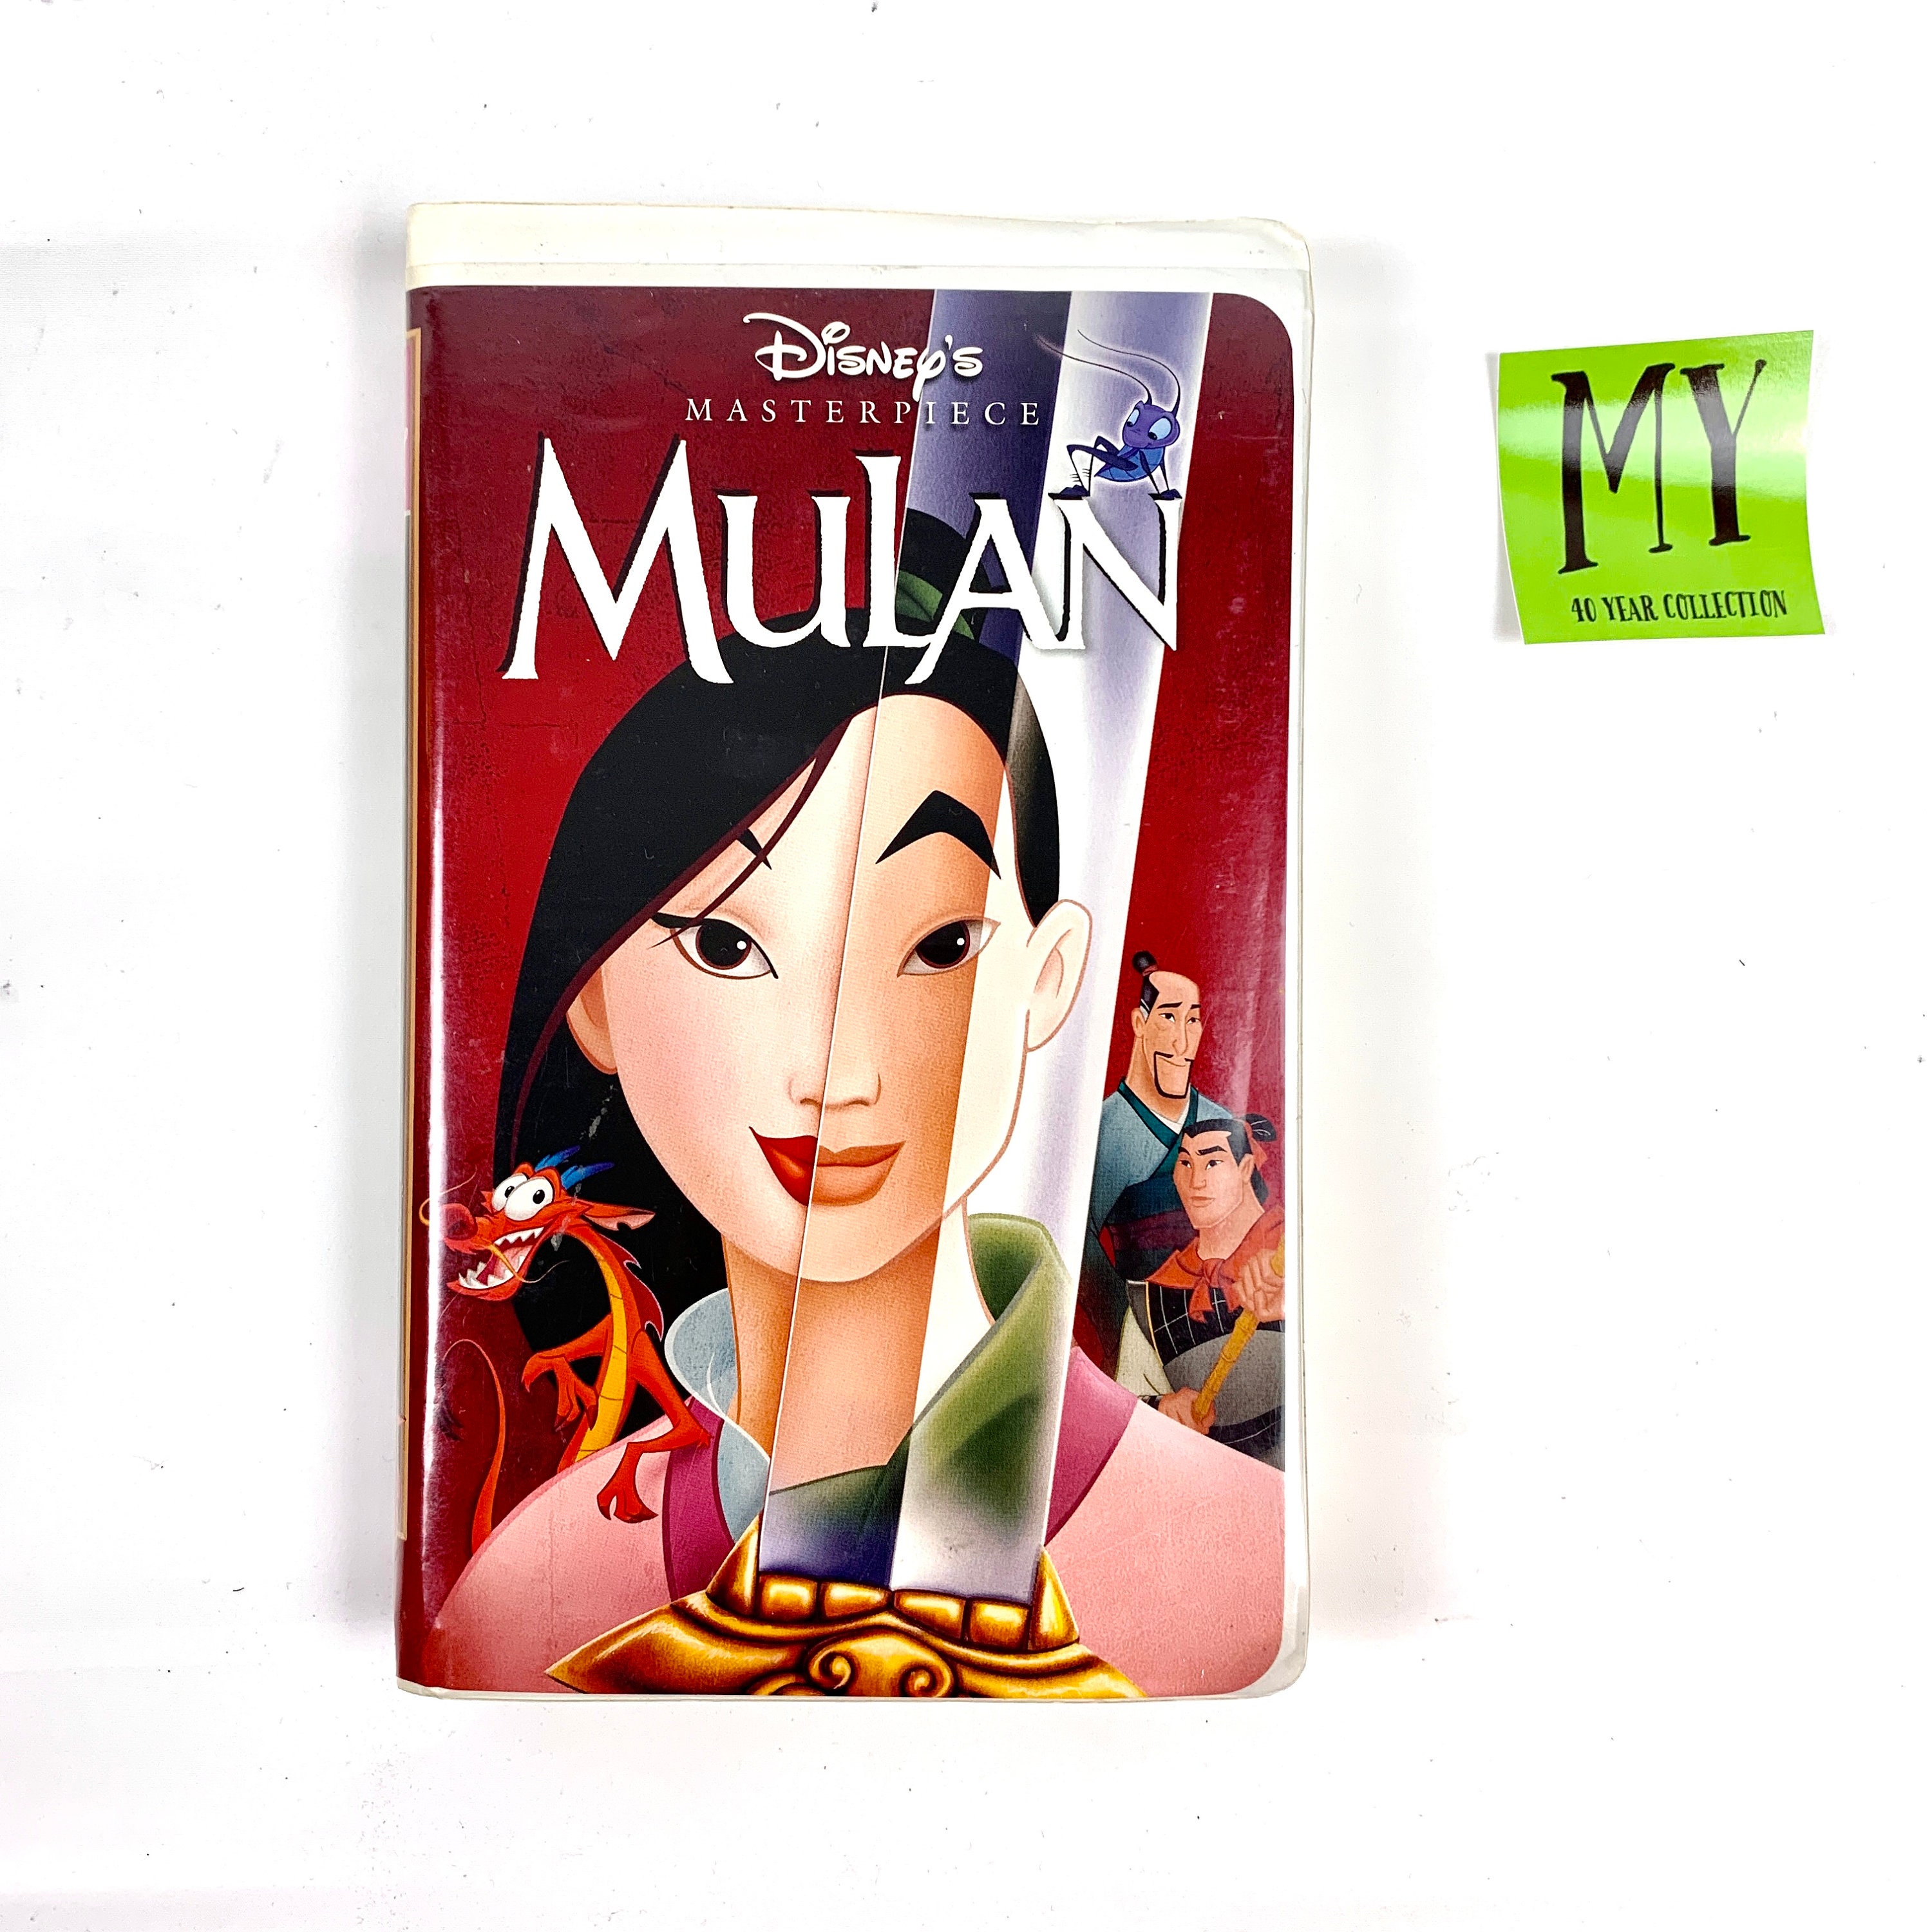 1999 Mulan Disneys Masterpiece Collection VHS Collectible